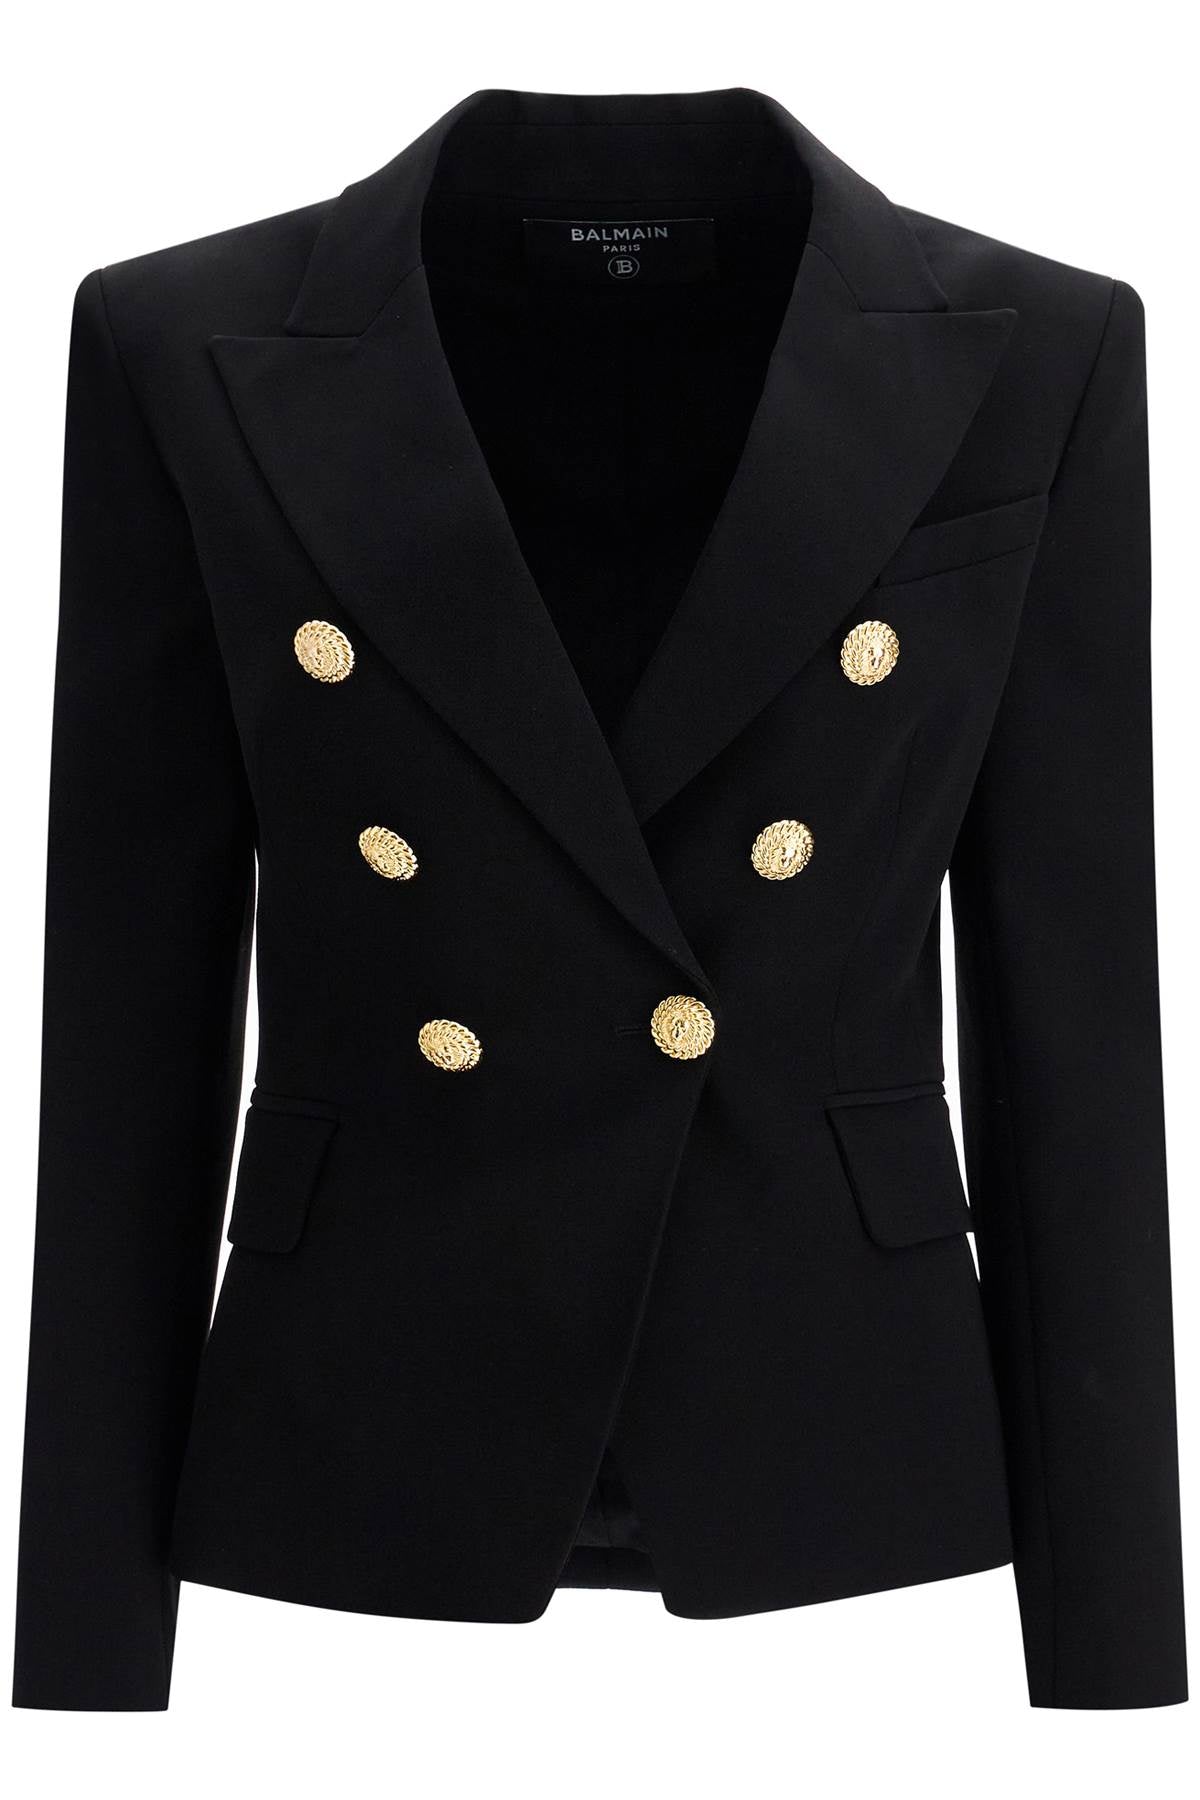 Balmain 6 Button Crepe Jacket For Women   Black